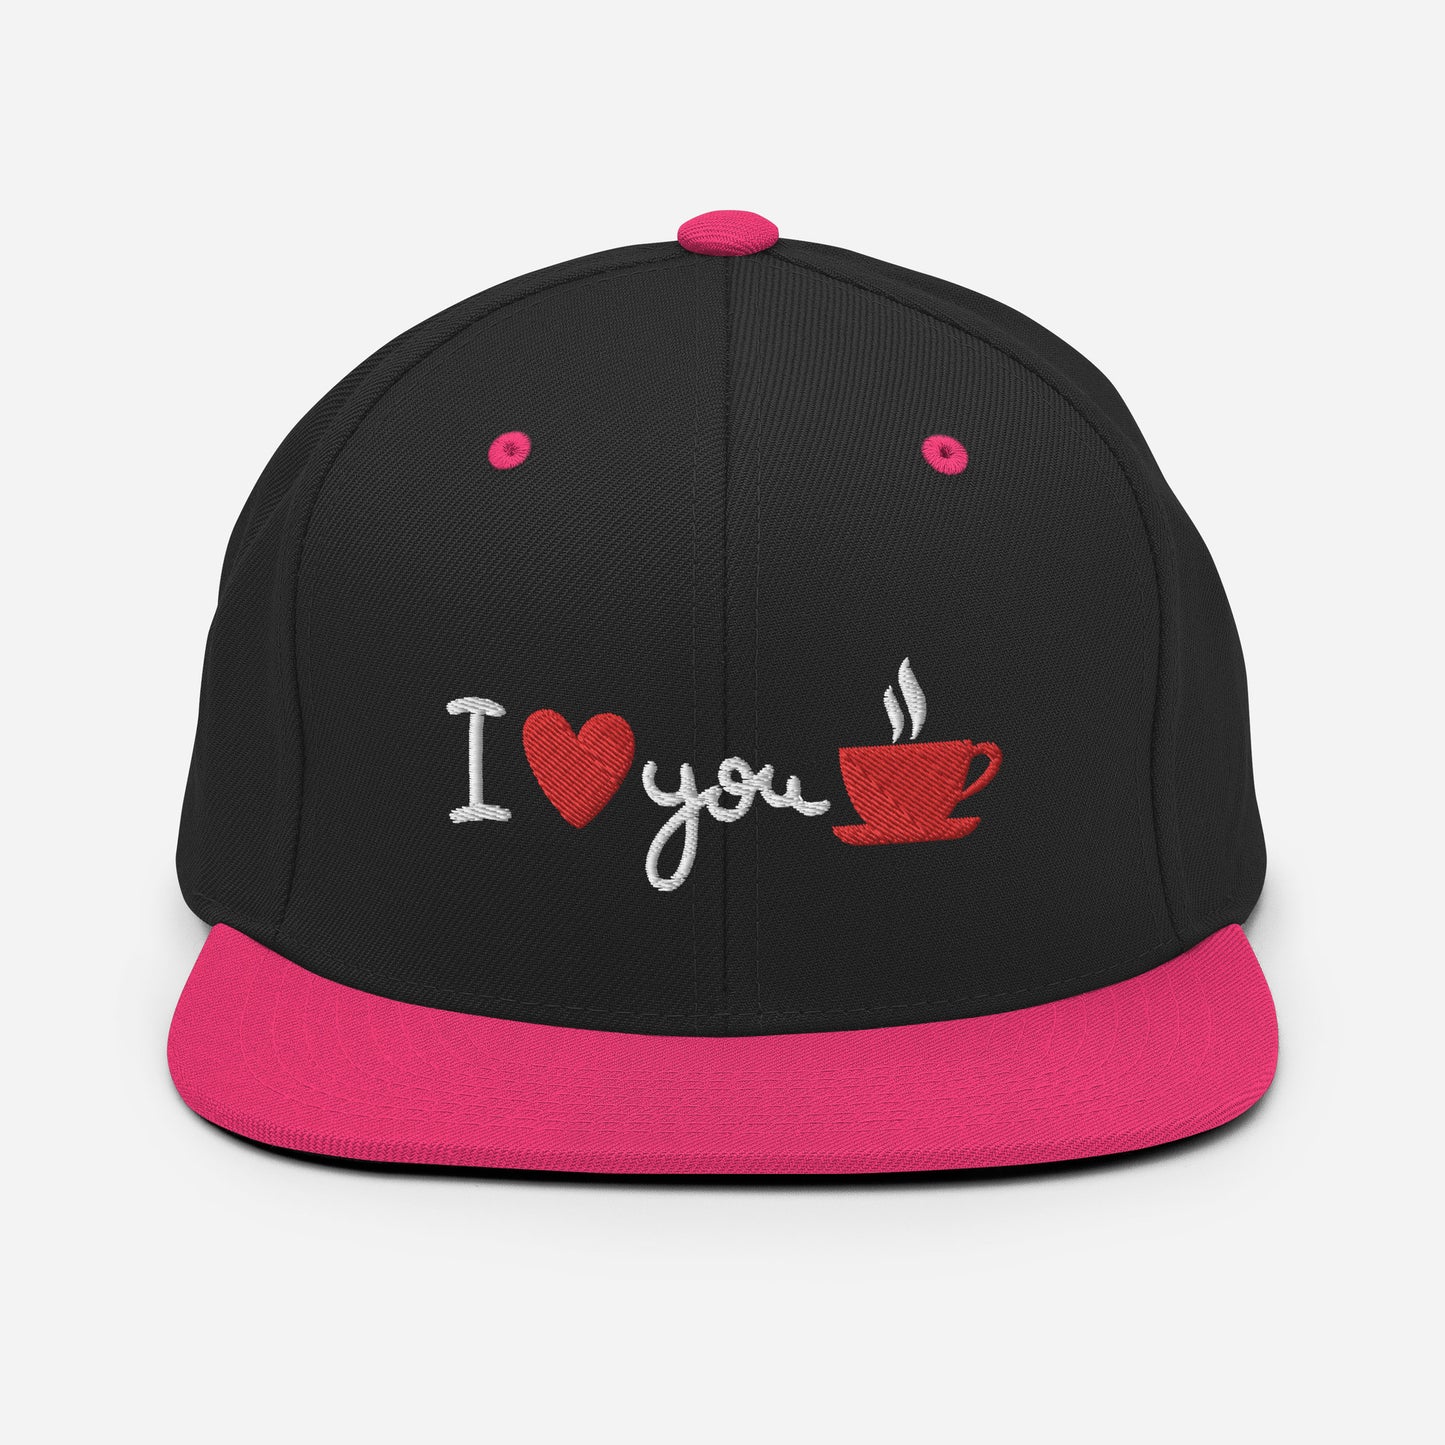 I LOVE YOU COFFEE - Snapback Hat